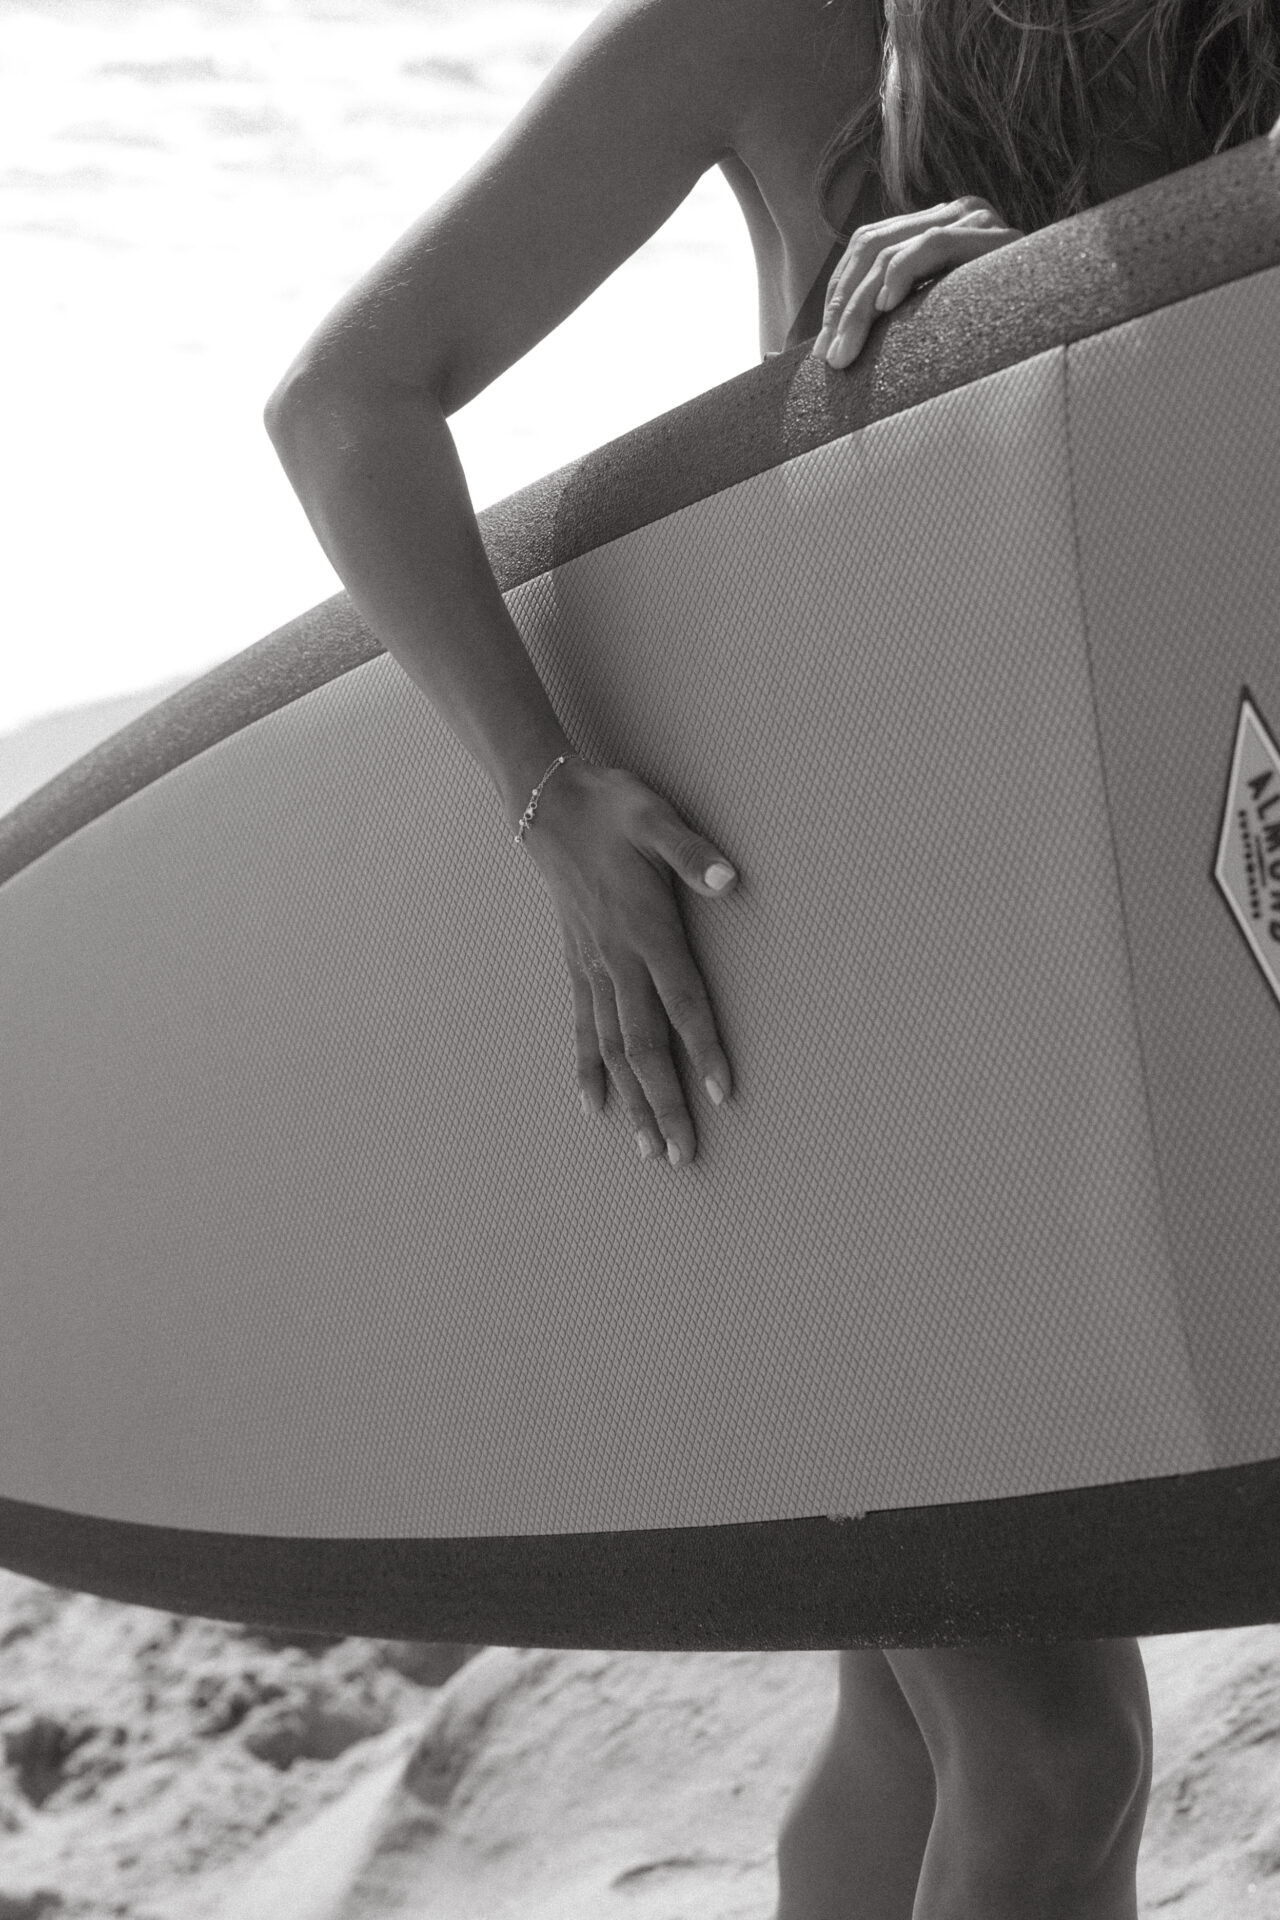 Venice surf board